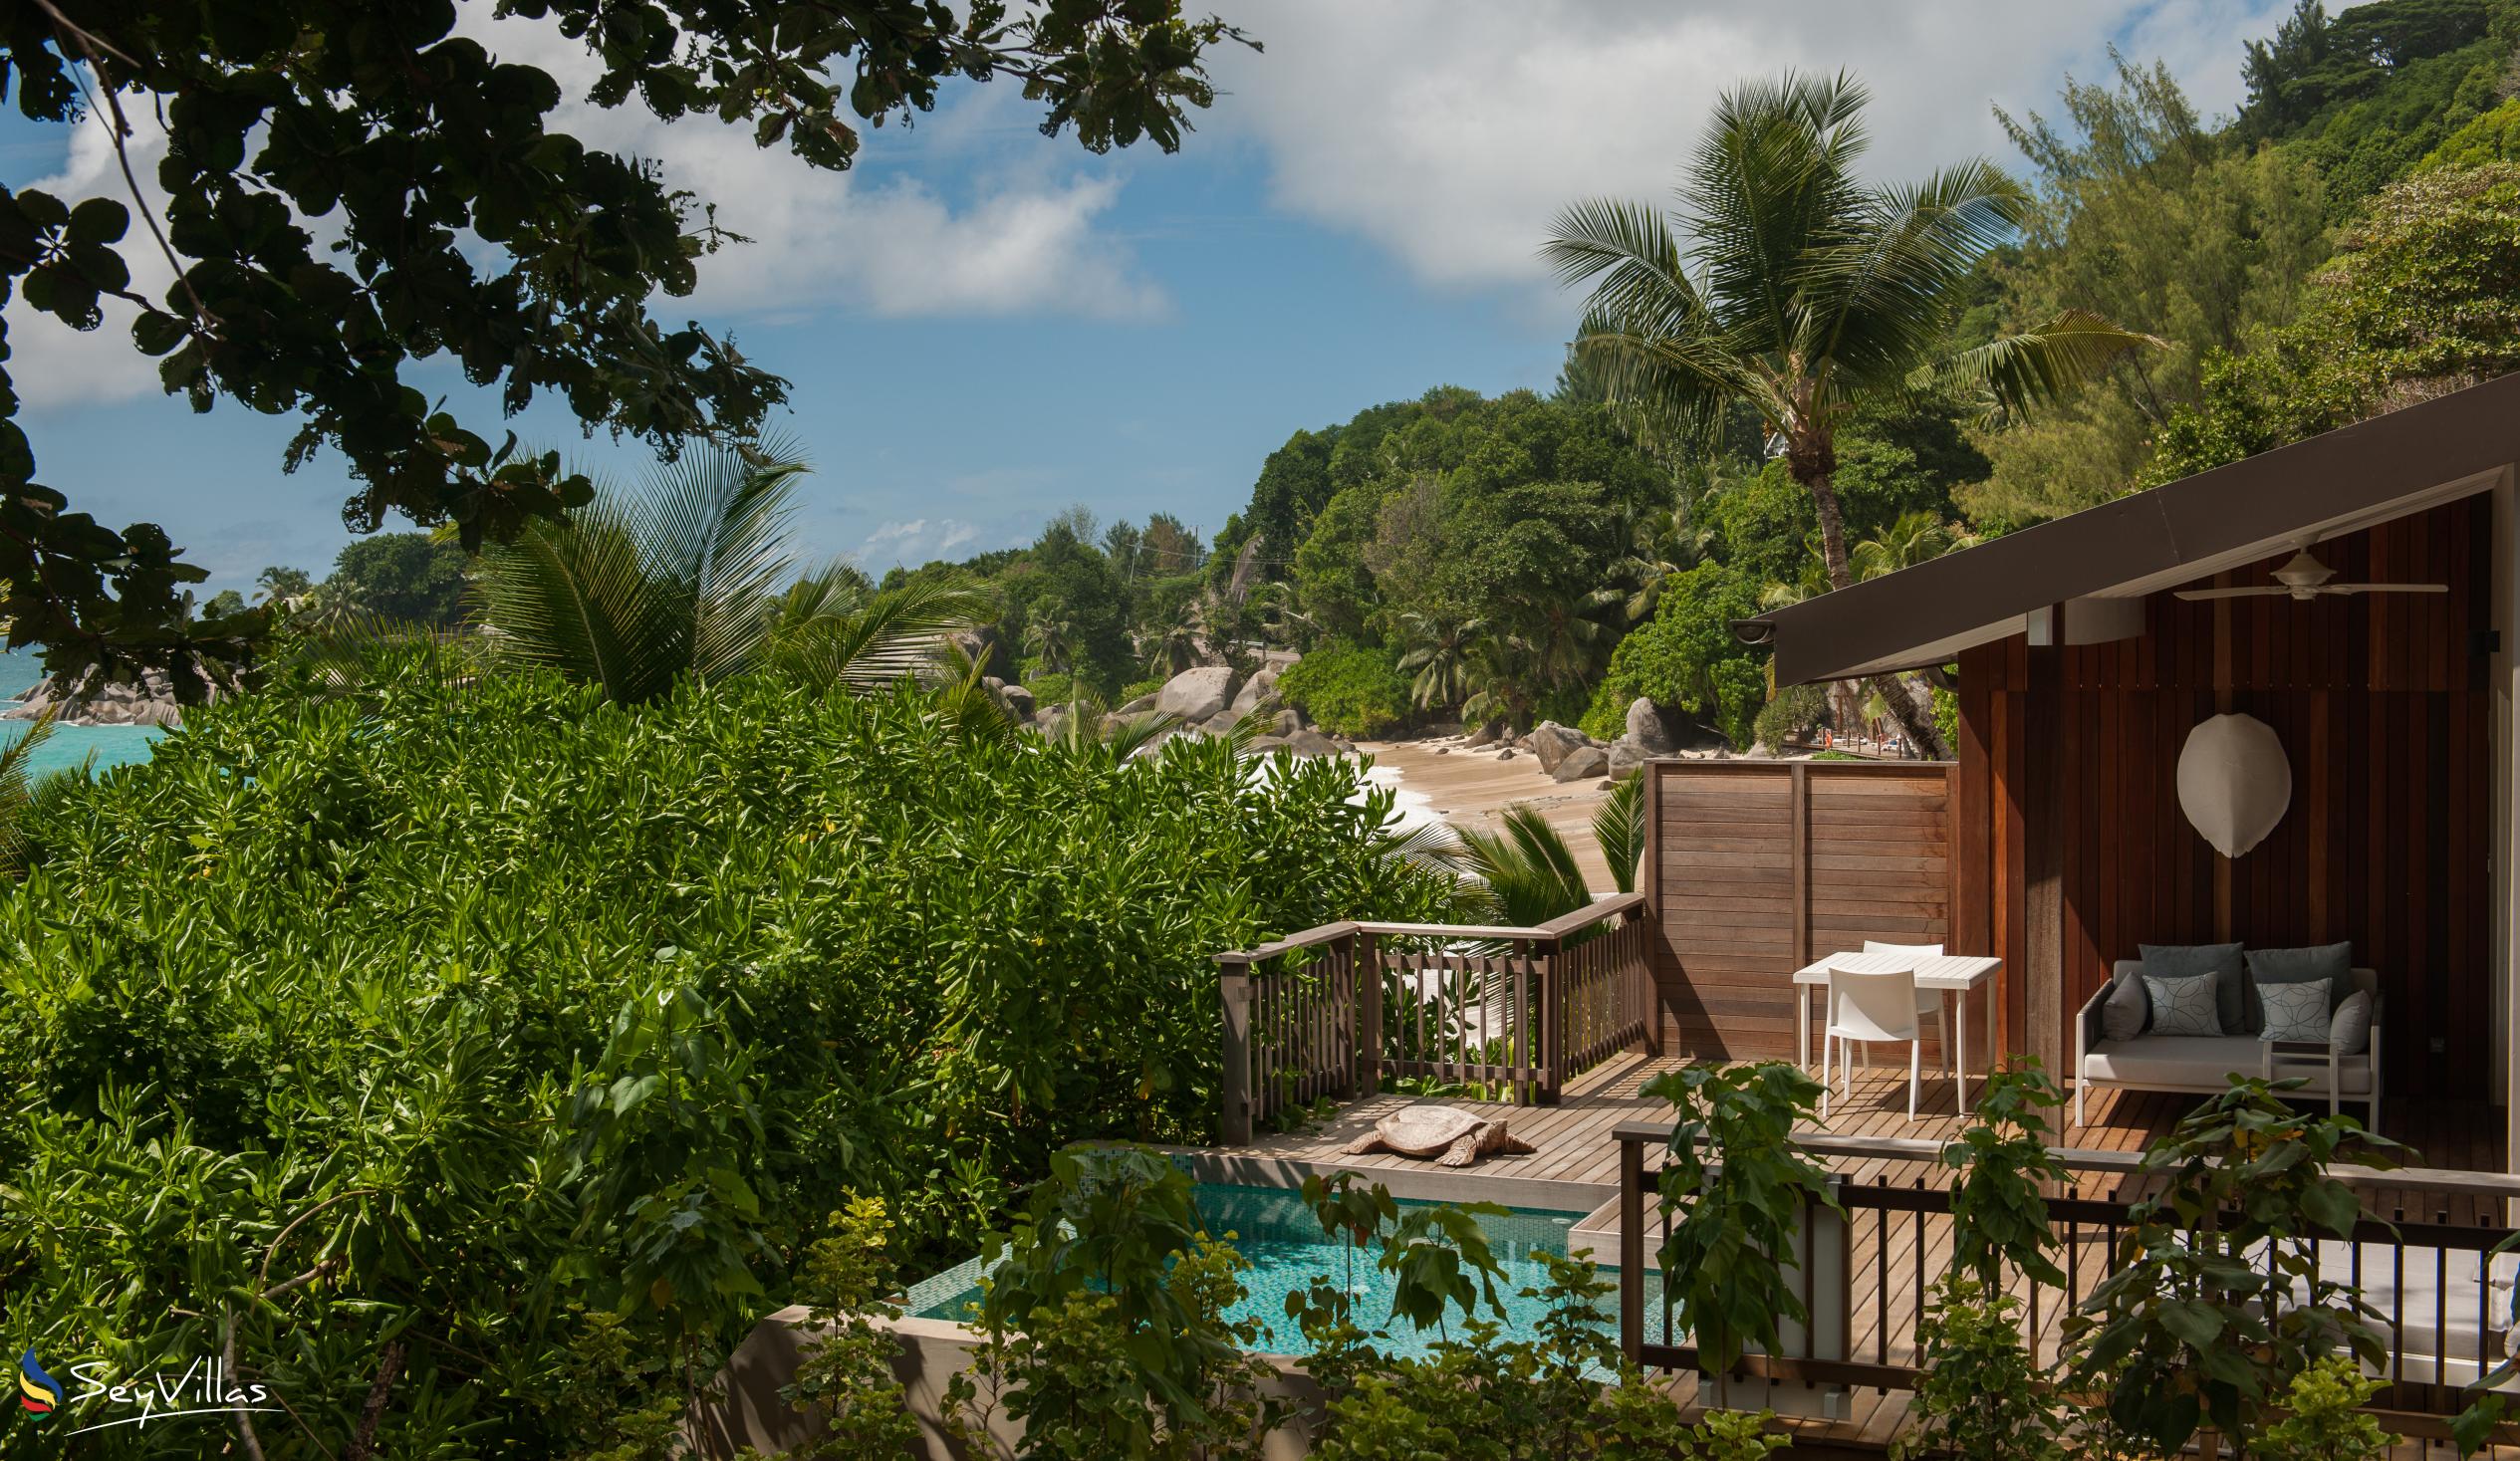 Foto 88: Carana Beach Hotel - Chalet vista mare e con piscina - Mahé (Seychelles)